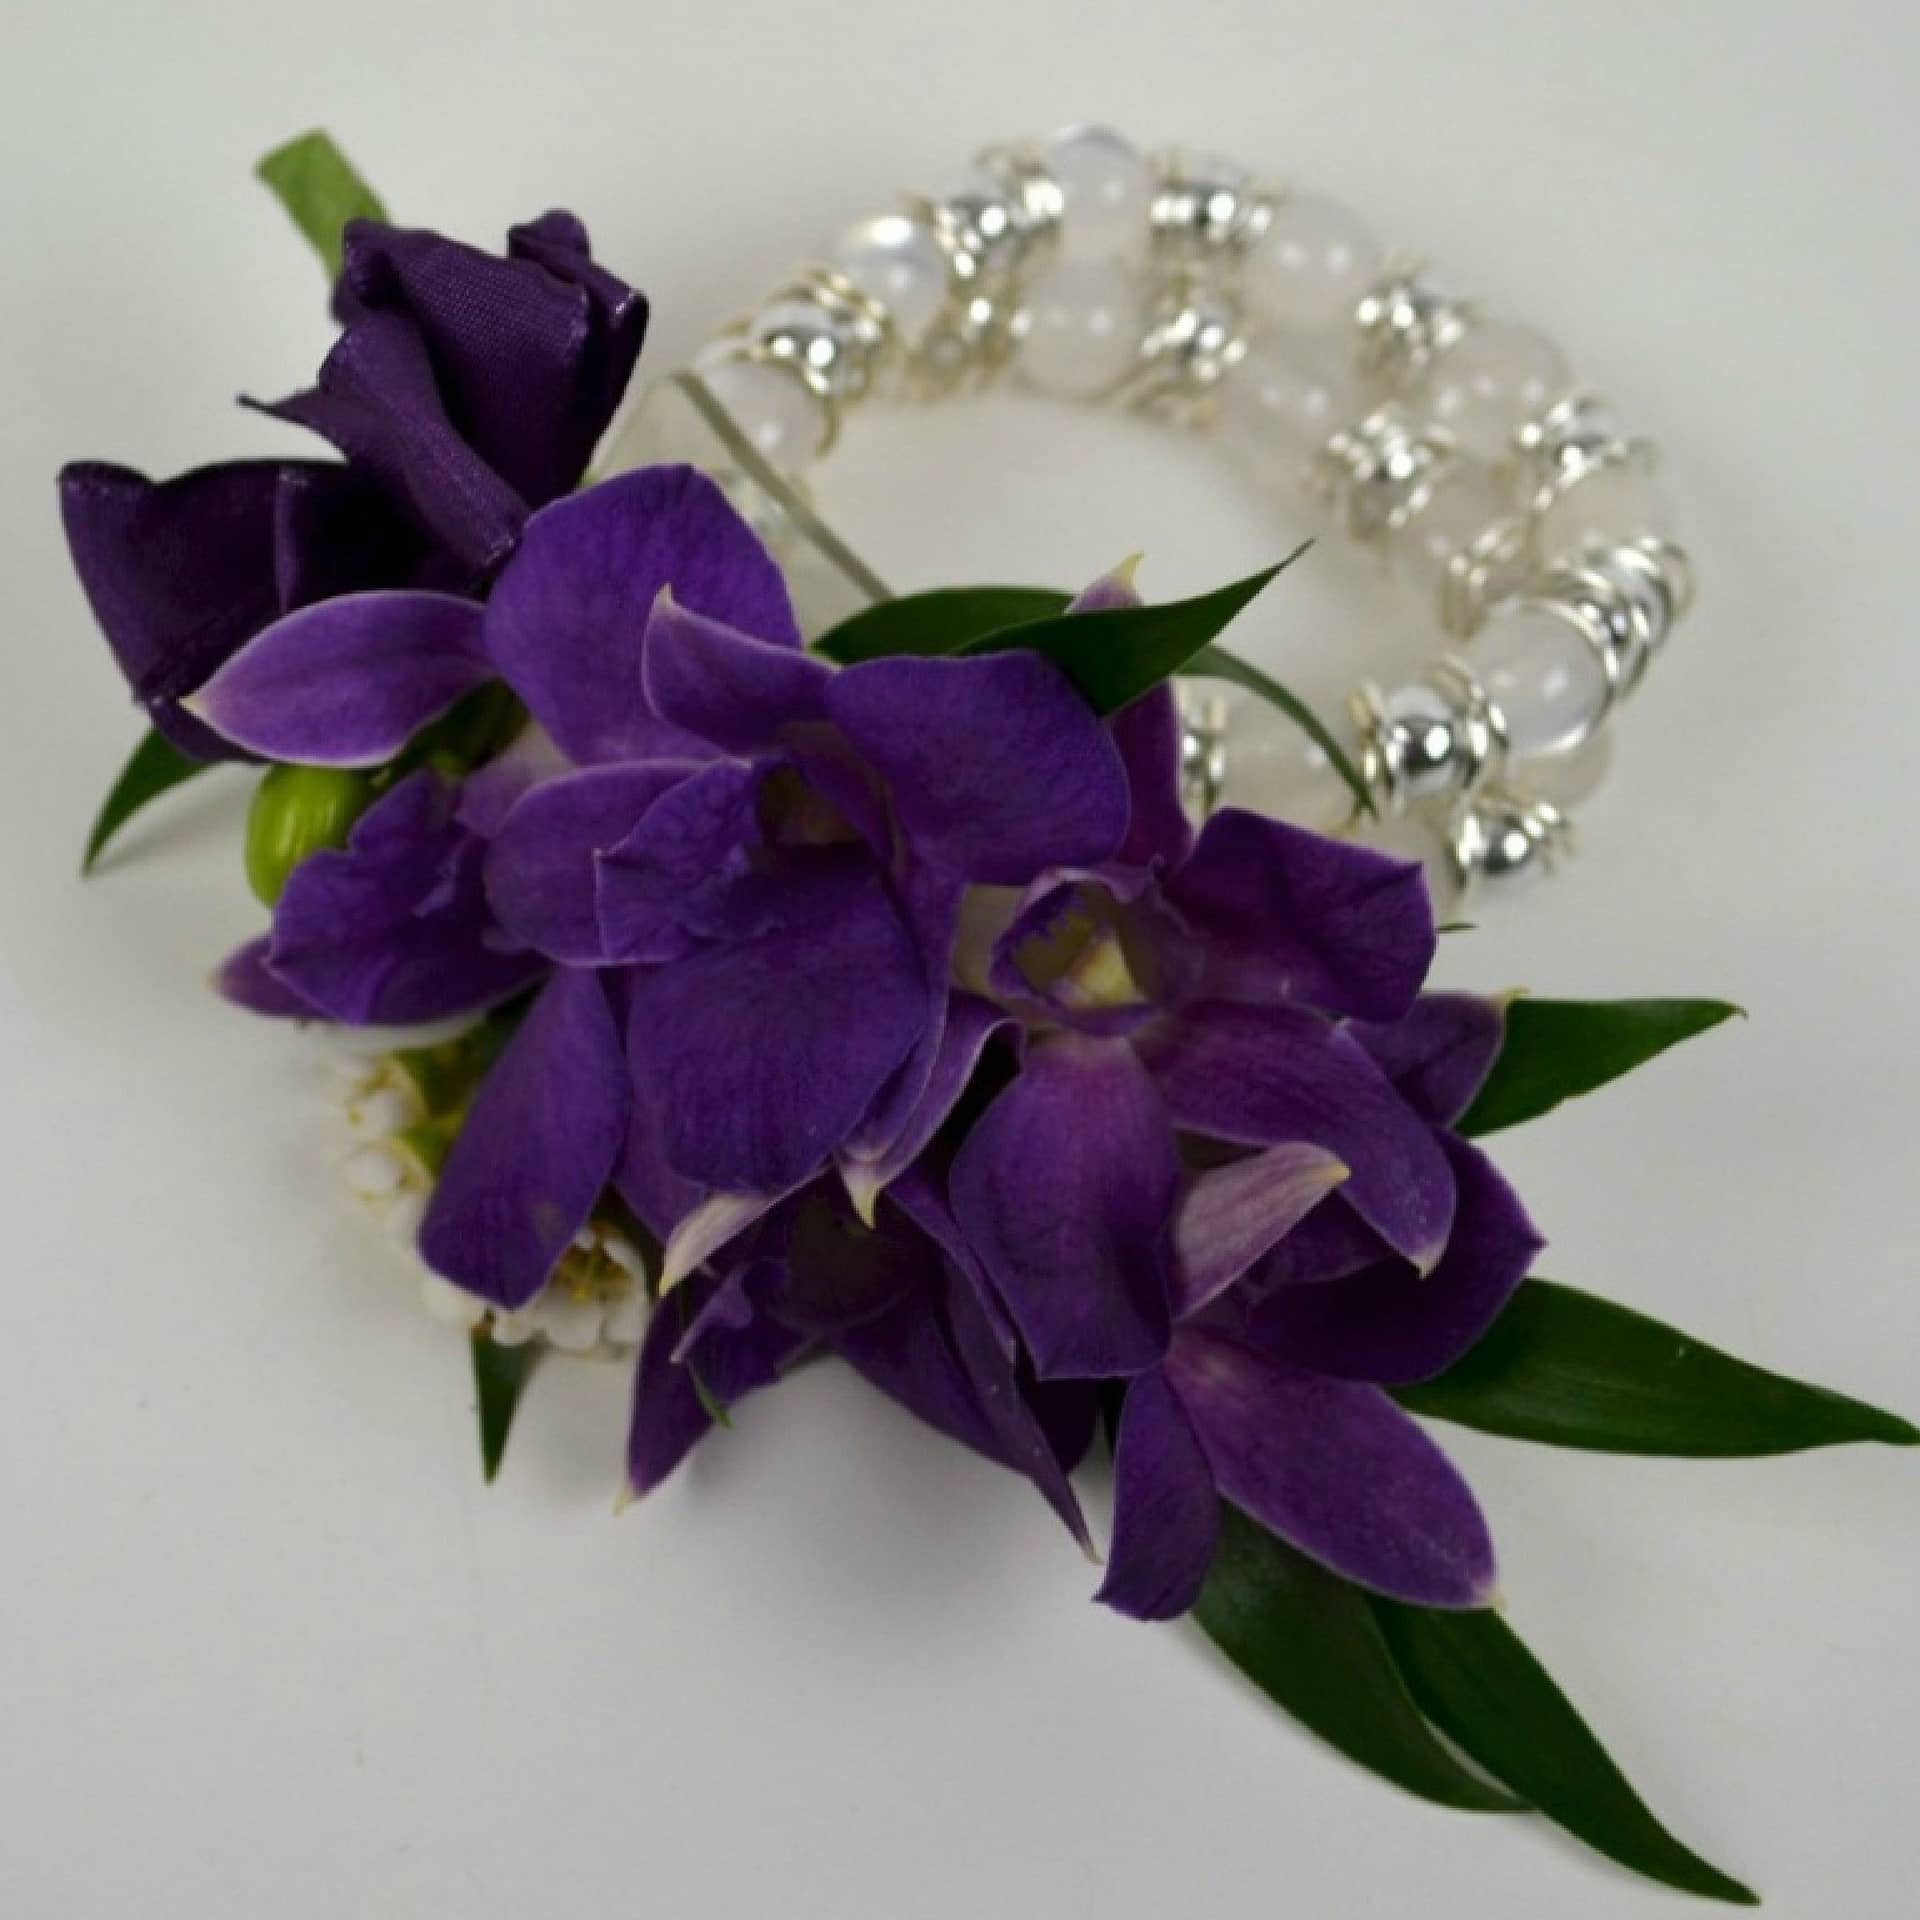 minneapolis-florist-wedding-purple-orchid-corsage